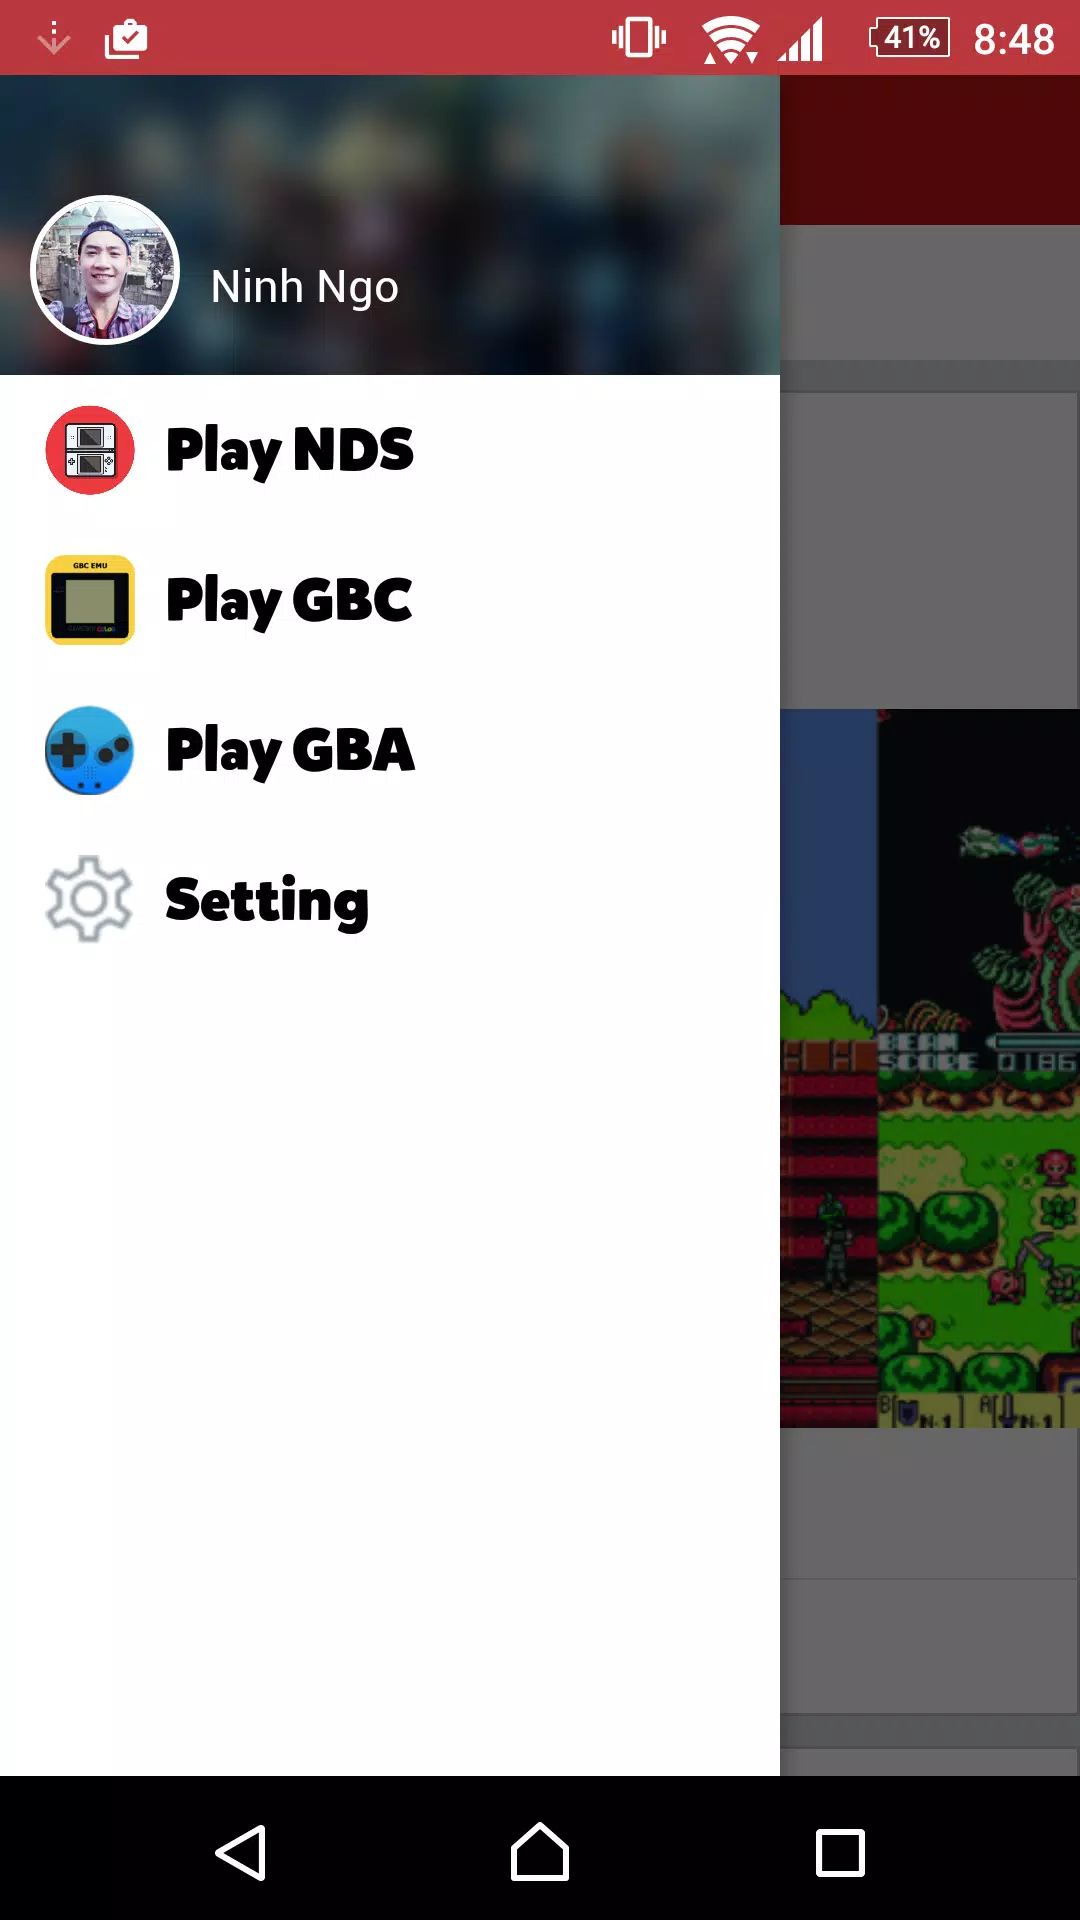 4 akanakisa Nintendo DS emulators e Android - Frontal Gamer